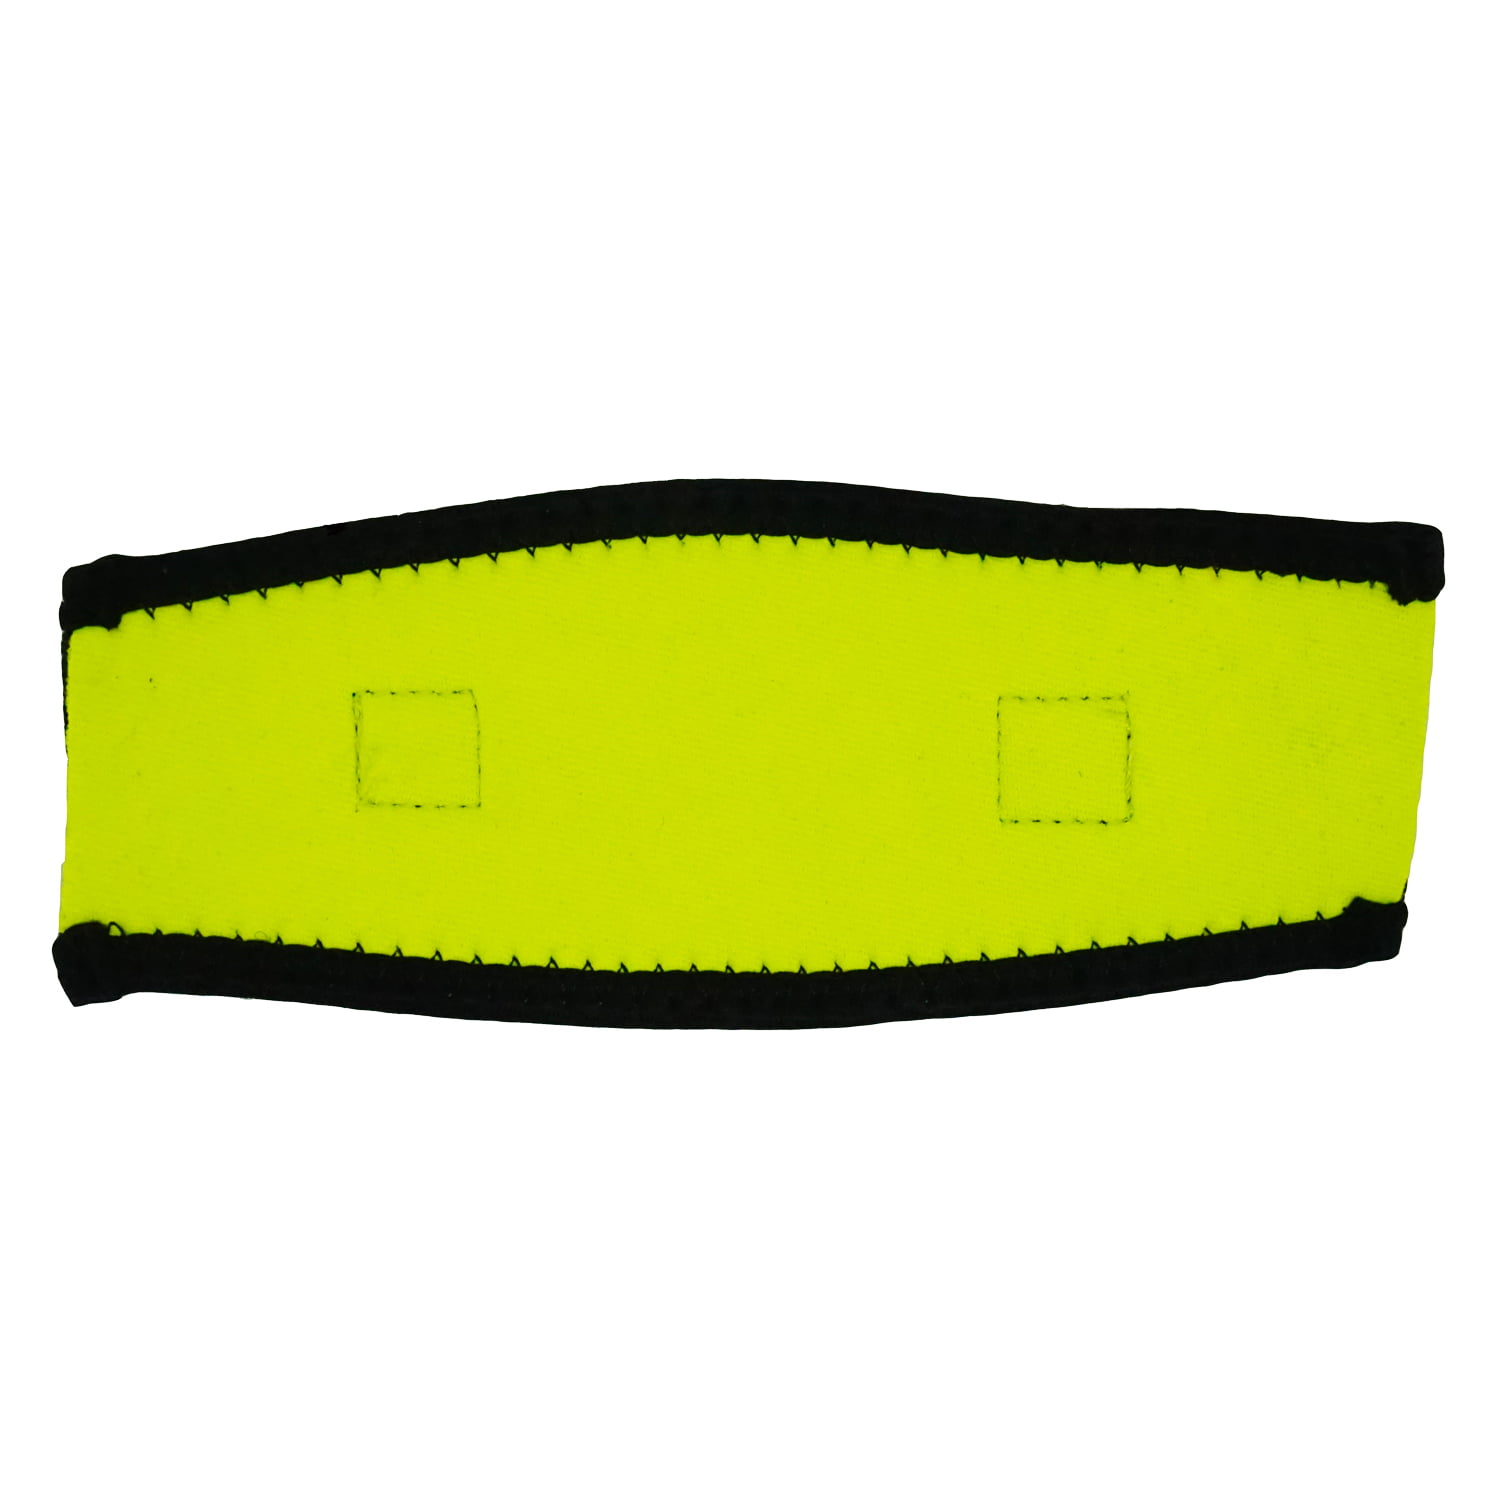 Scuba Choice Adult Comfort Neoprene Mask Strap Cover Yellow 